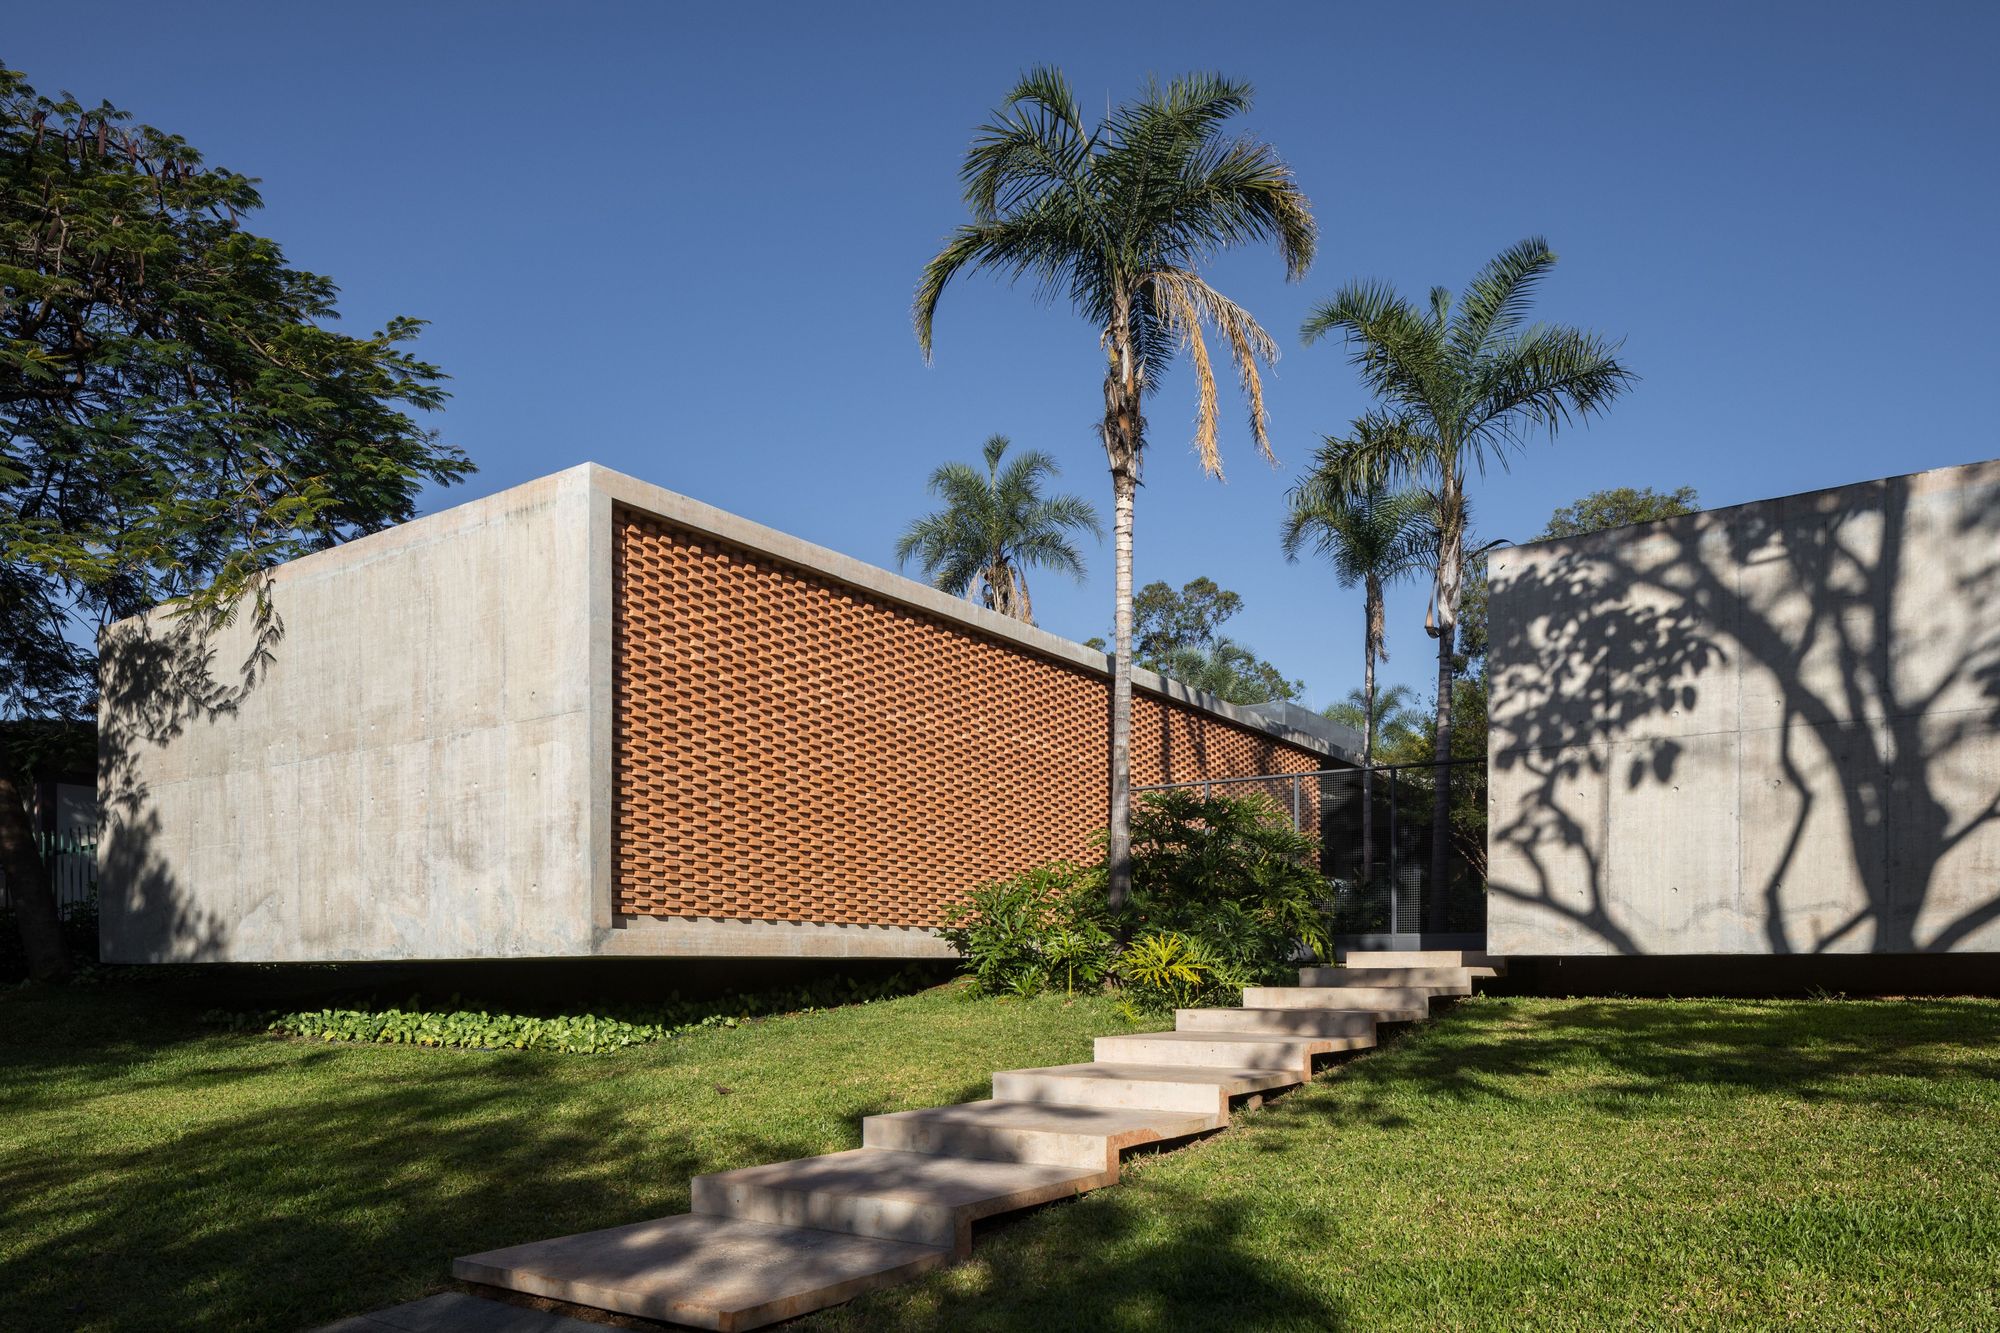 BLOCO Arquitetos Creates The “U” Shaped House Called Colina